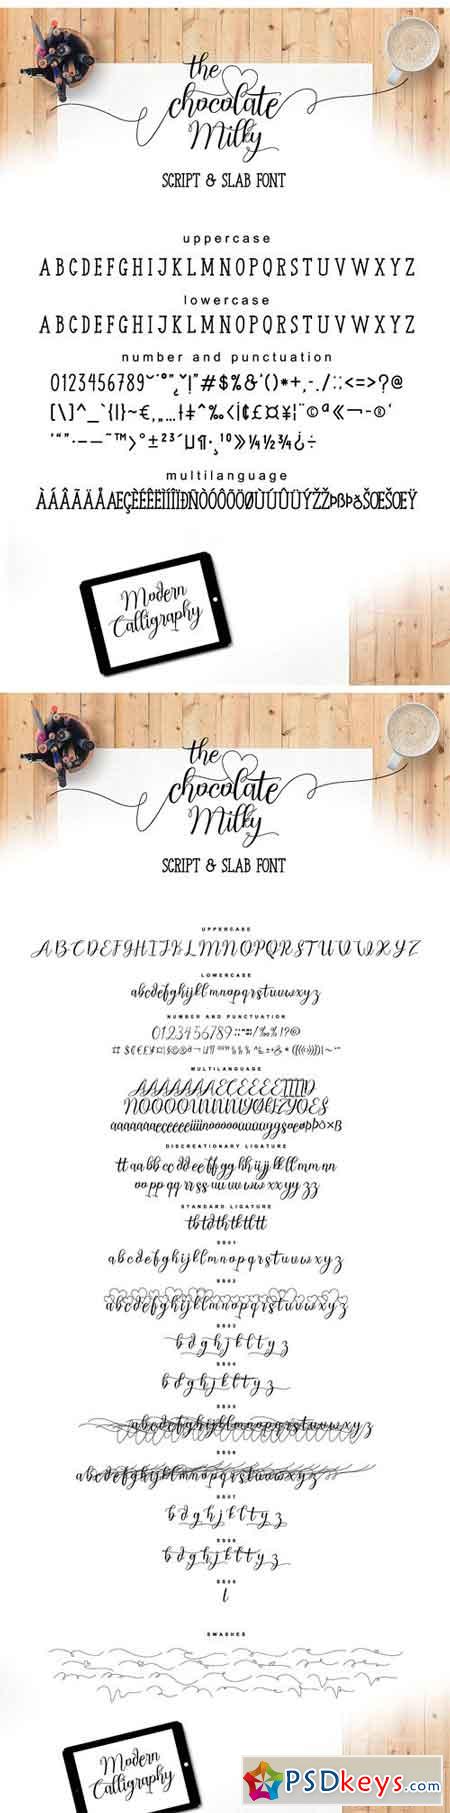 Chocolate Milky (Script And Slab) 1682701